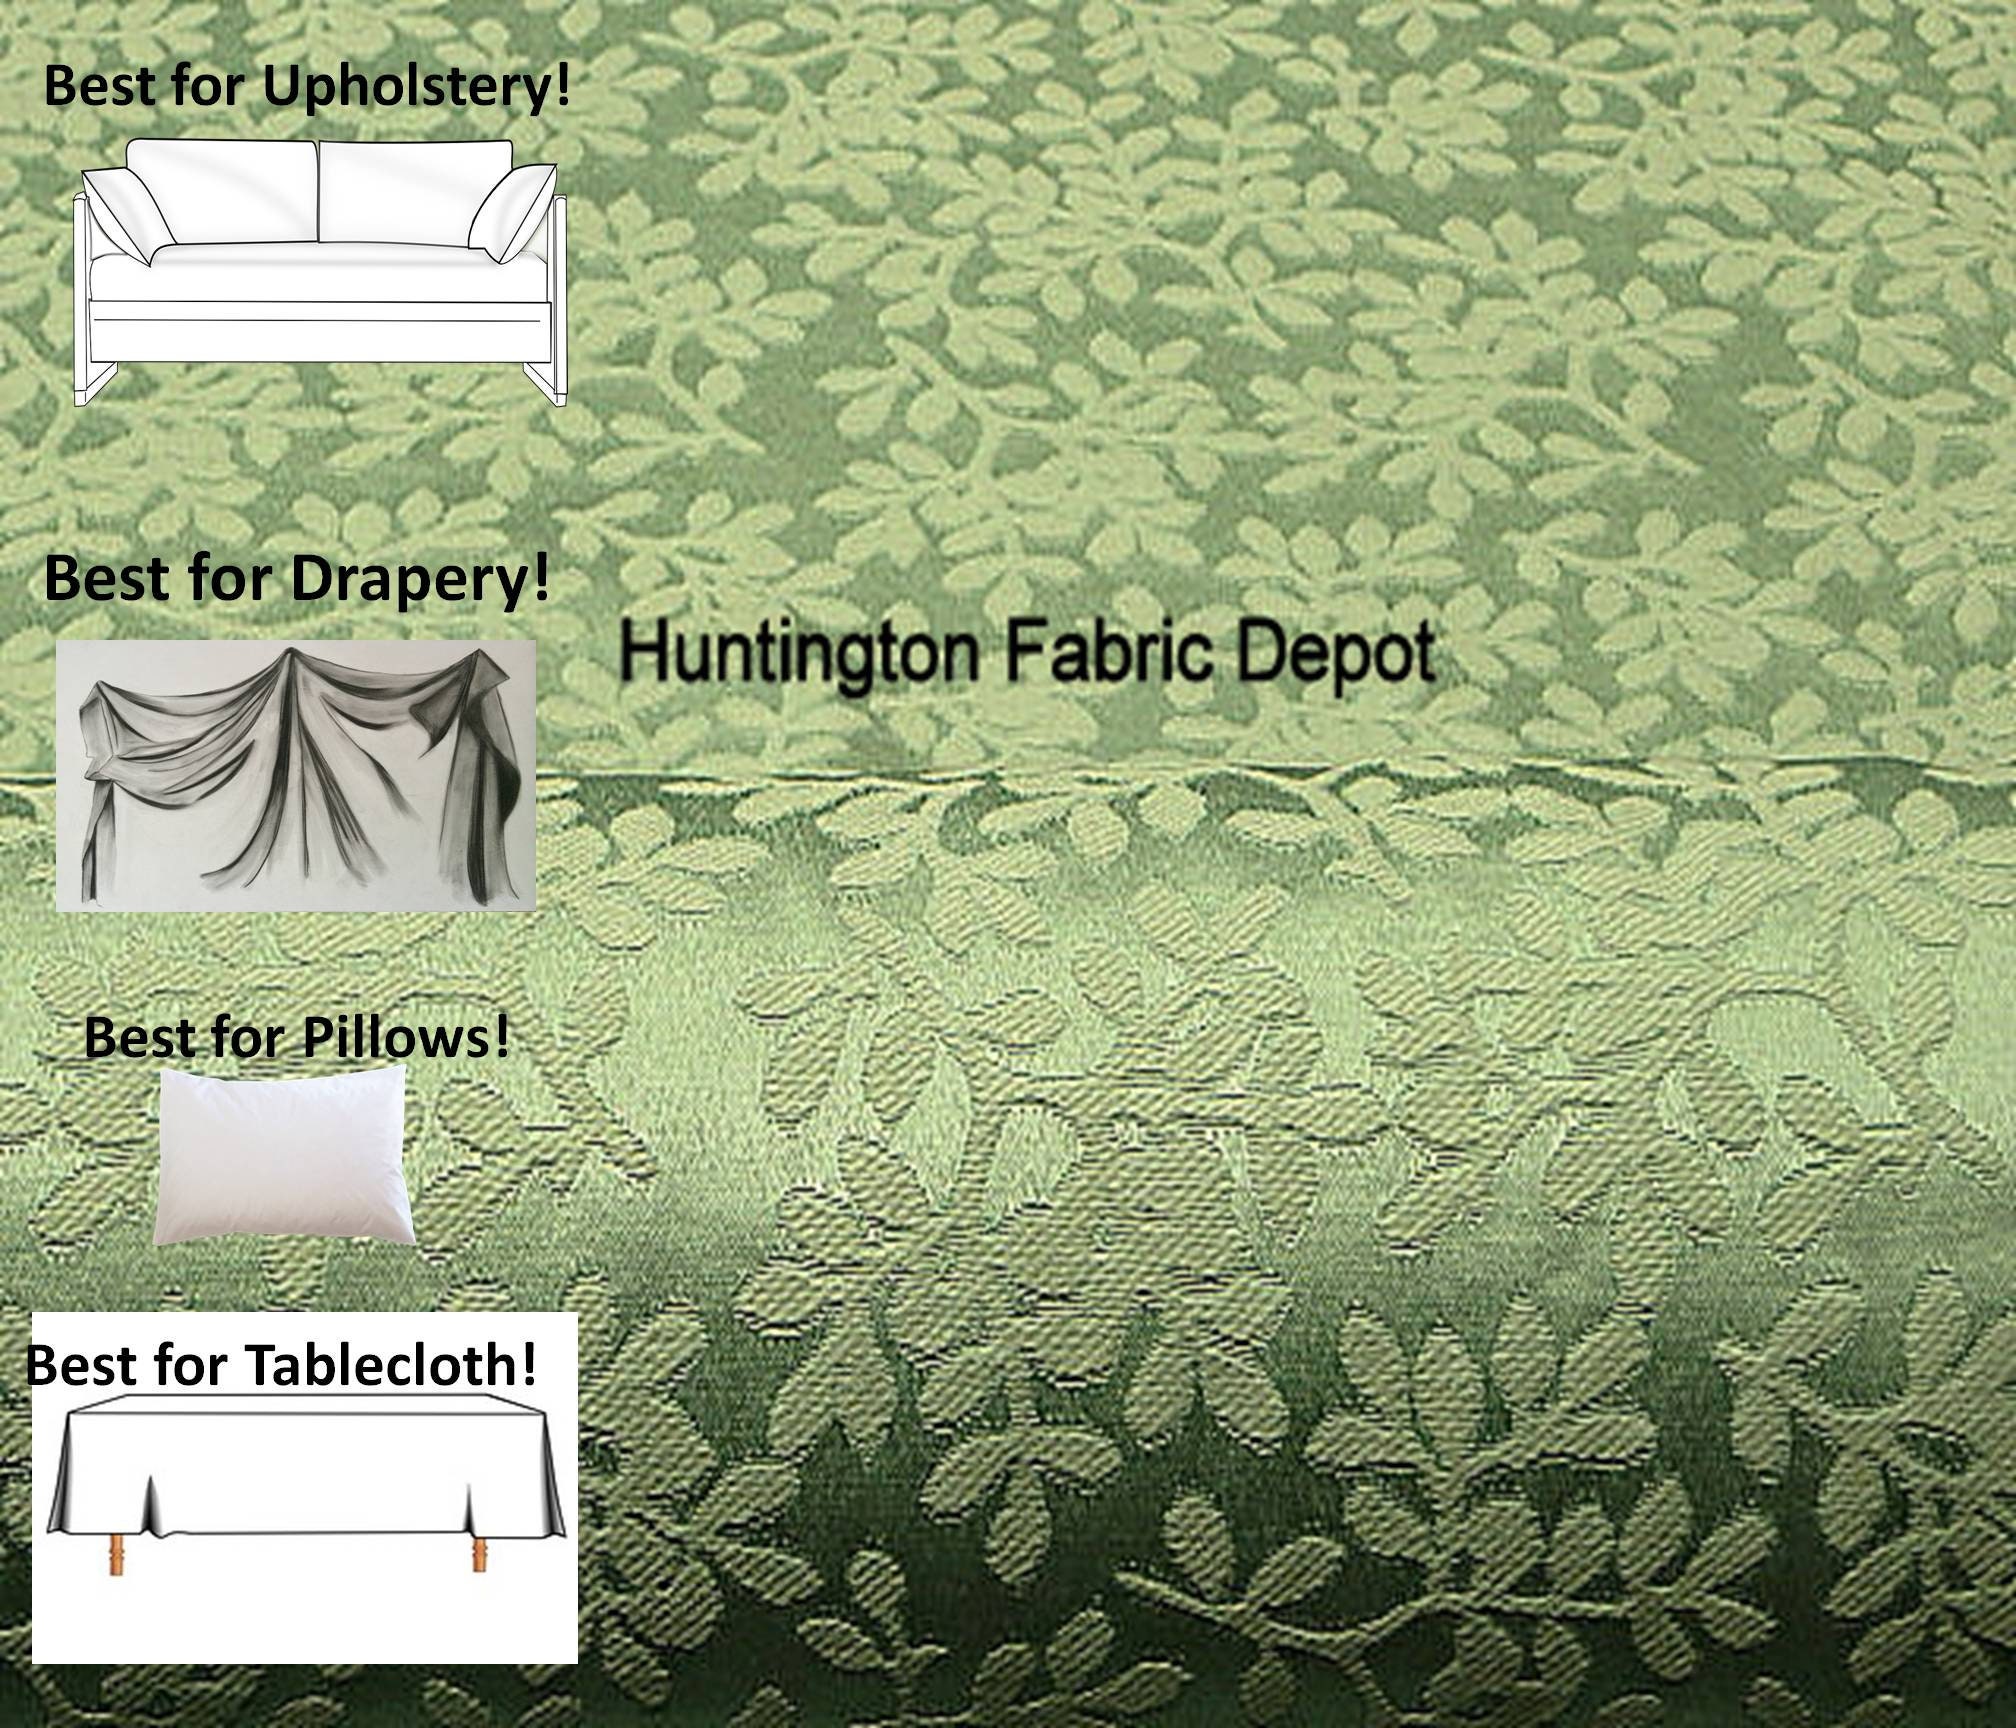 Drapery Fabric - Explore our Drapery Fabric Options